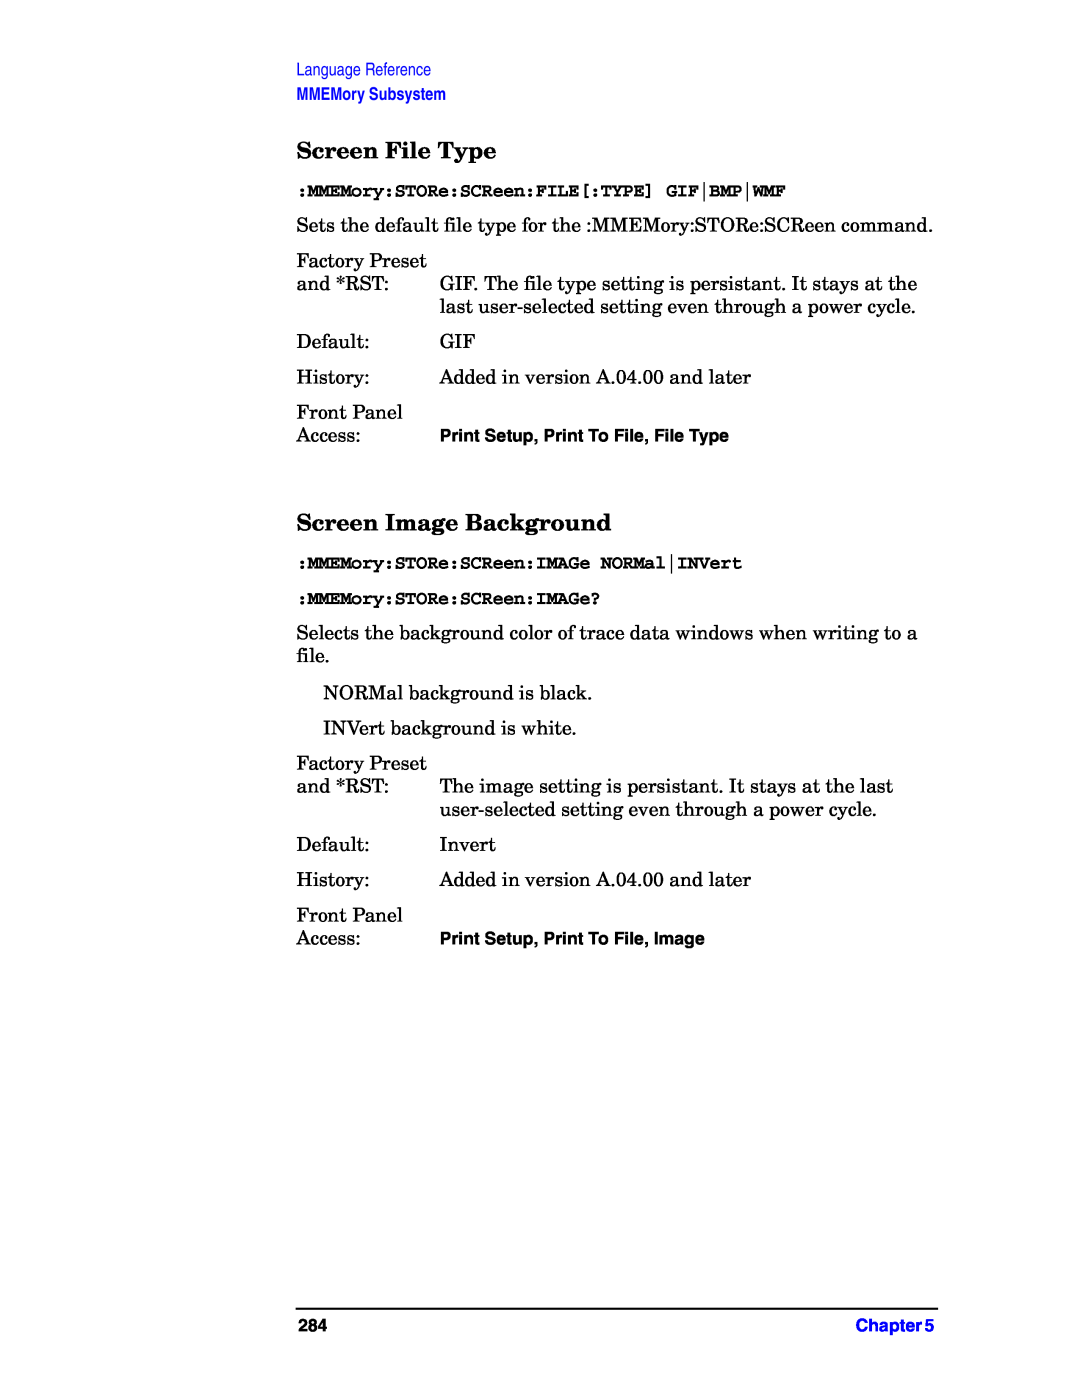 Agilent Technologies E4406A VSA Screen File Type, Screen Image Background, MMEMory:STORe:SCReen:FILE:TYPE GIF|BMP|WMF 